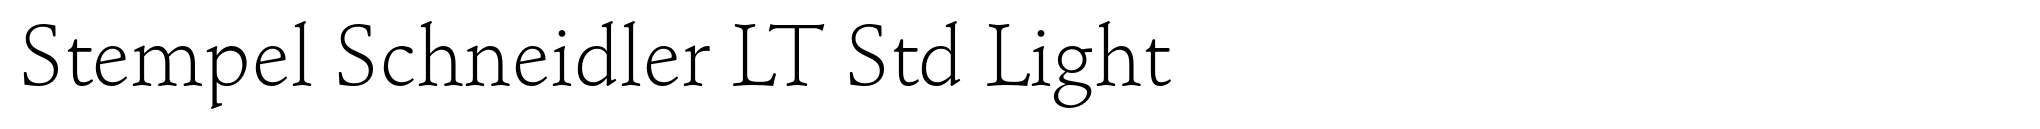 Stempel Schneidler LT Std Light image